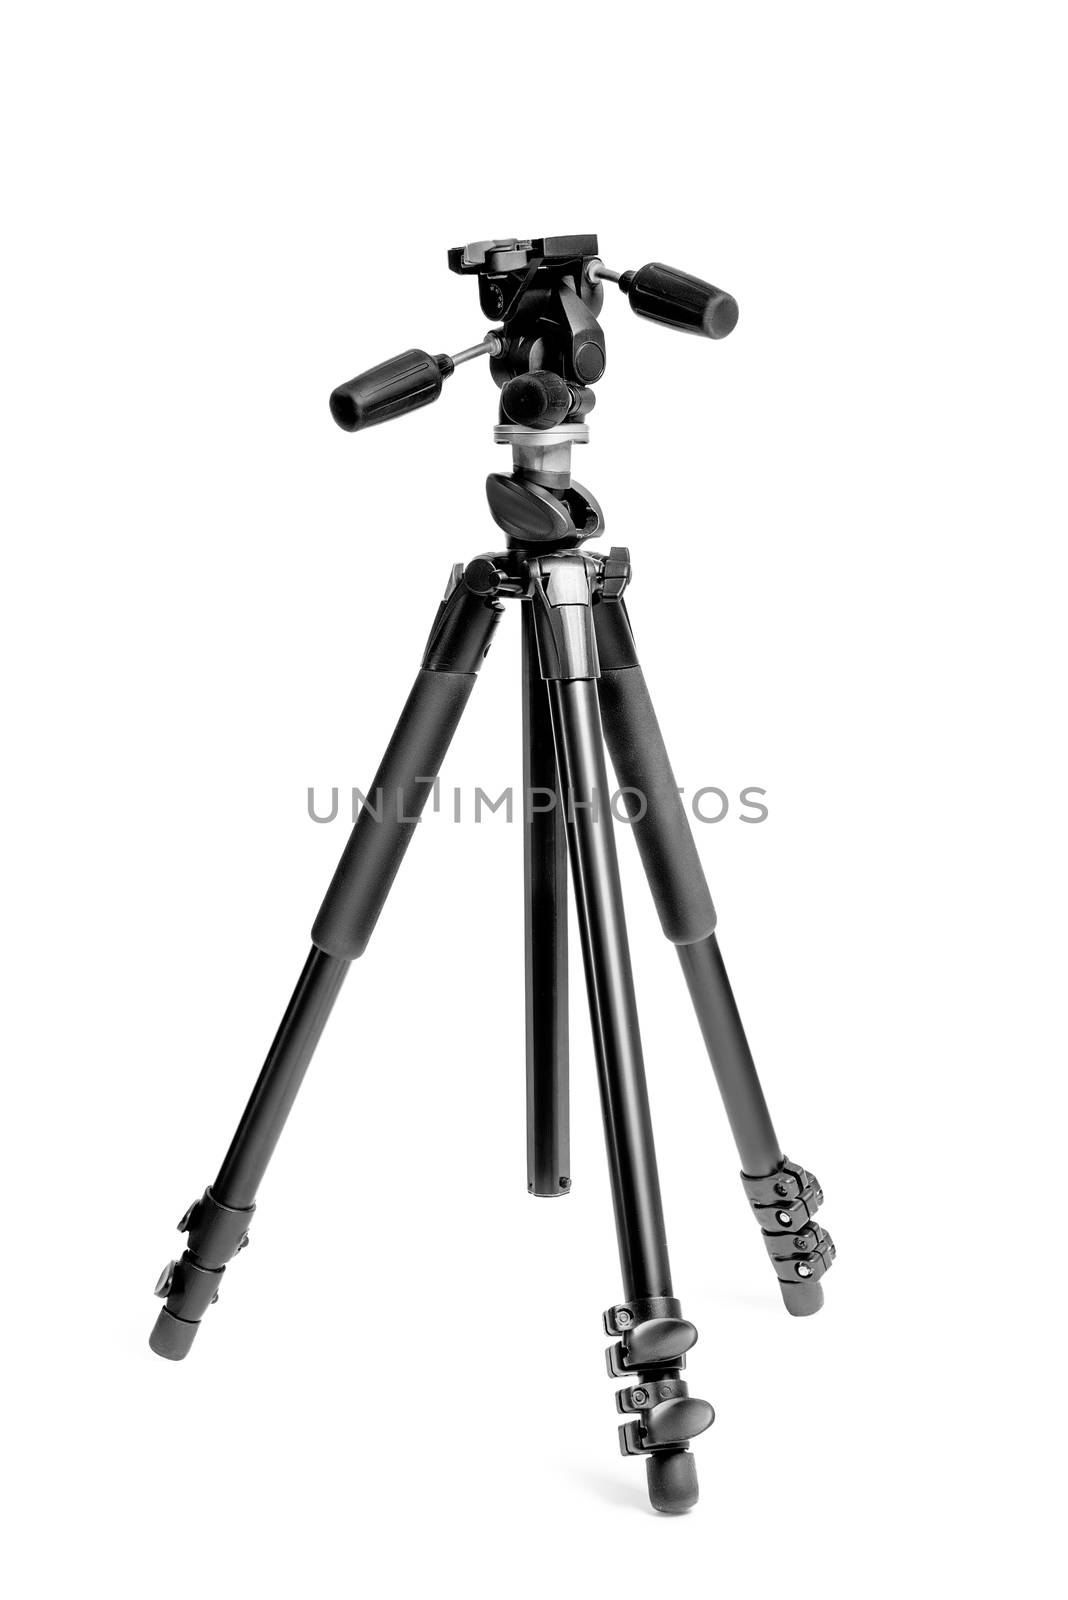 tripod for photo camera in photo studio on white background close-up